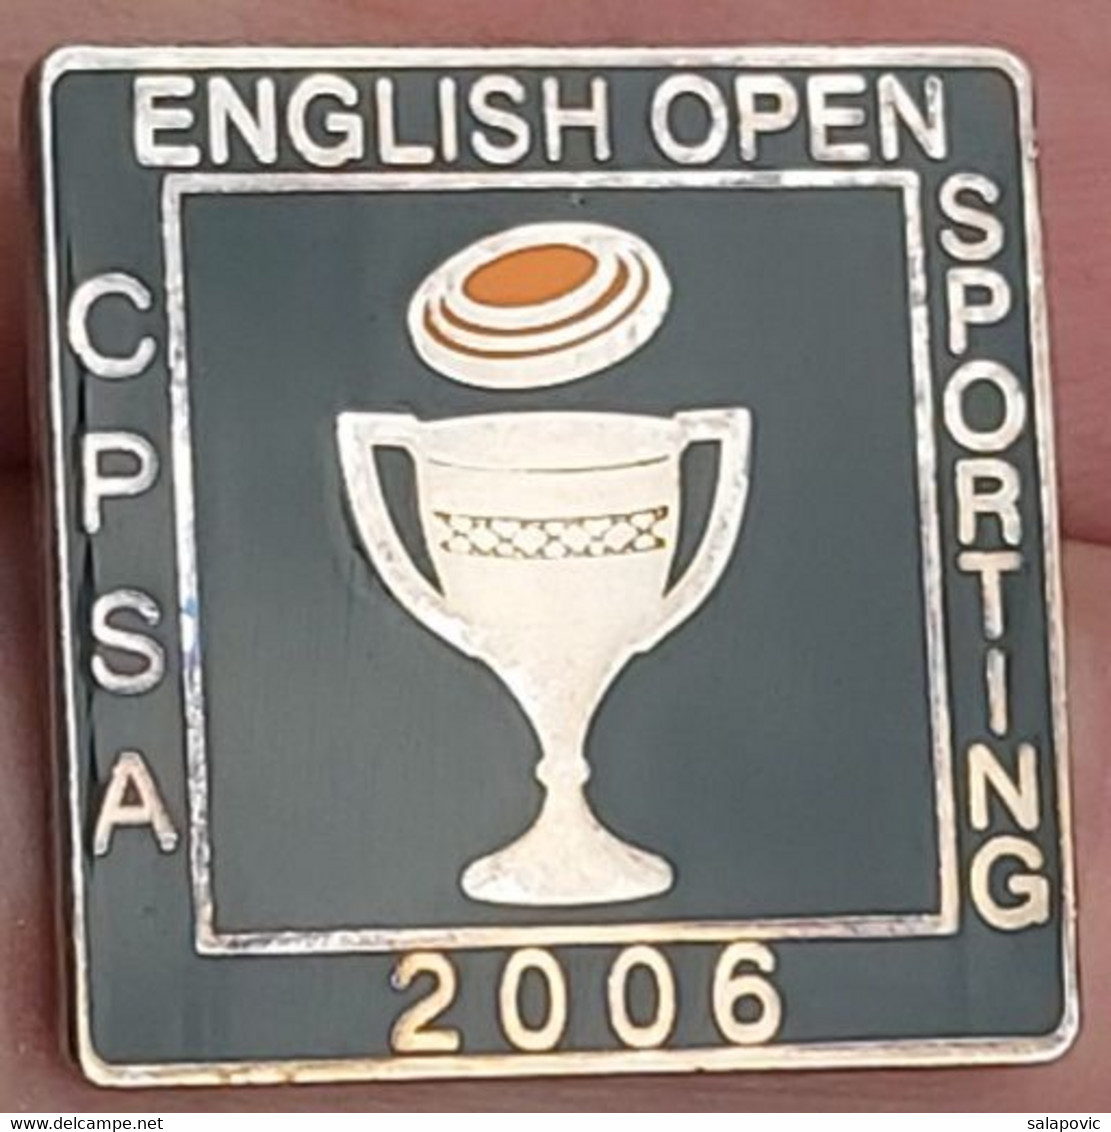 English Open Sporting (CPSA) Clay Pigeon Shooting Association 2006 Archery Shooting PINS BADGES A5/4 - Tir à L'Arc